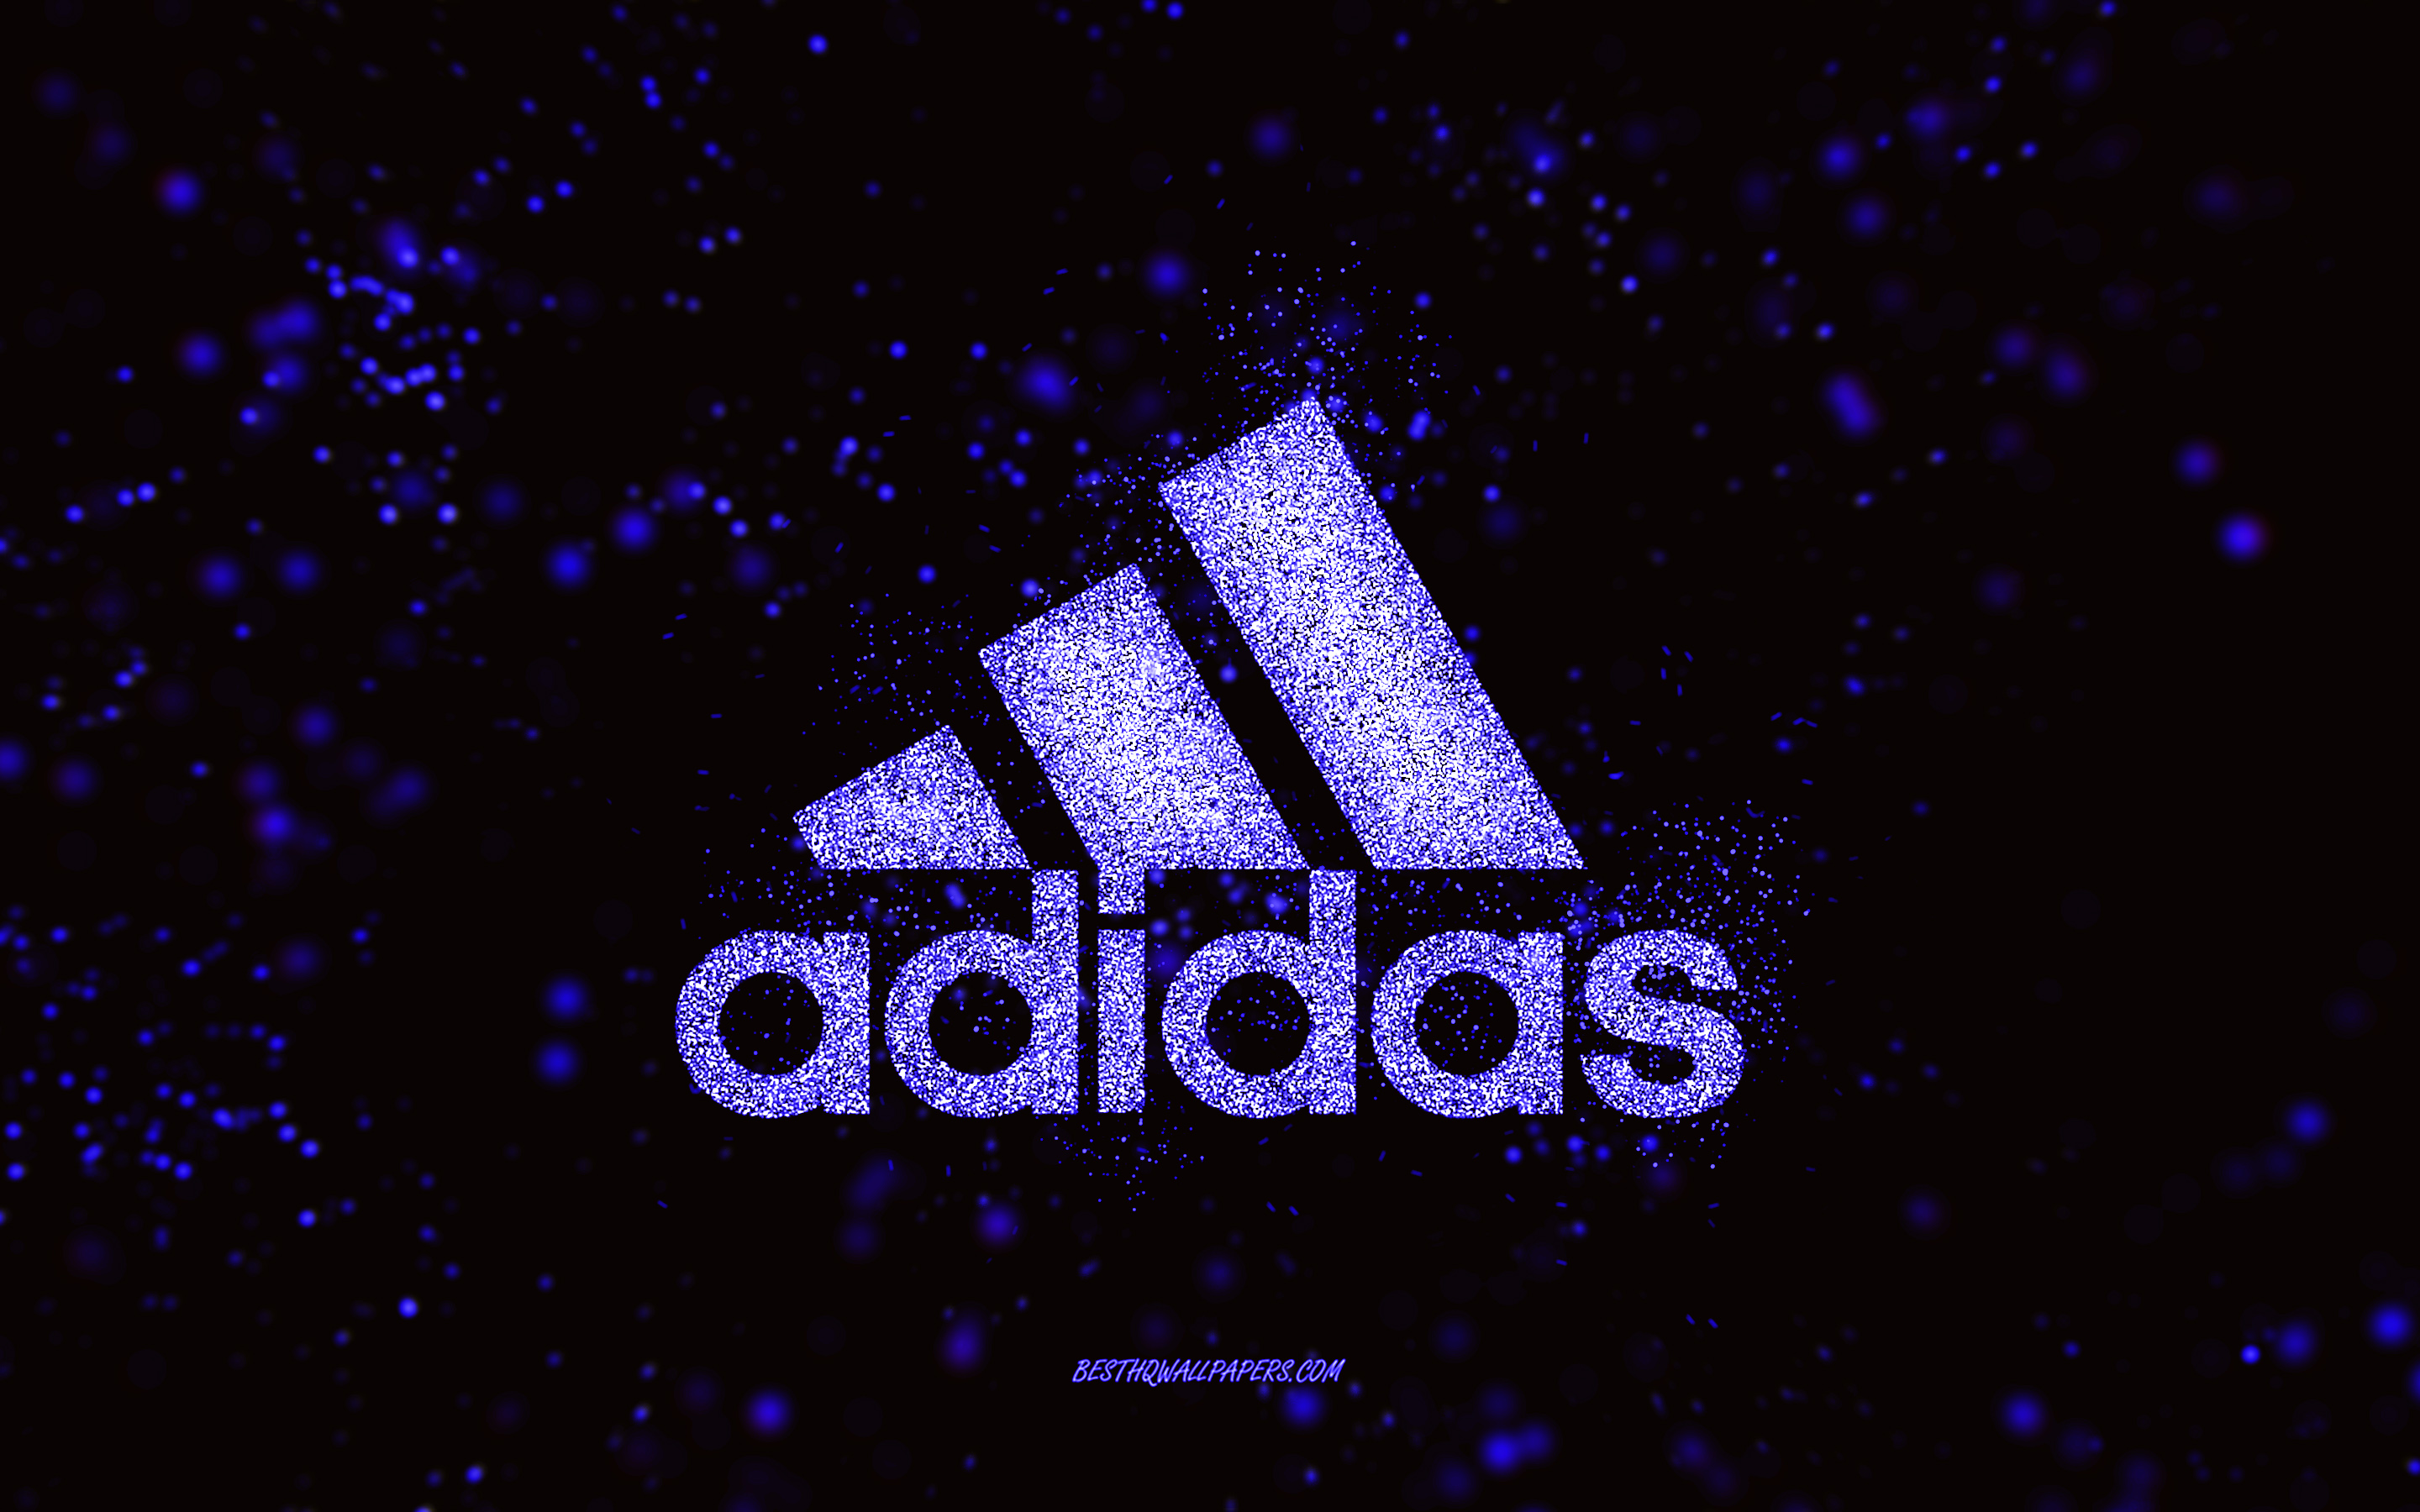 Download wallpaper Adidas glitter logo, black background, Adidas logo, blue glitter art, Adidas, creative art, Adidas blue glitter logo for desktop with resolution 2880x1800. High Quality HD picture wallpaper